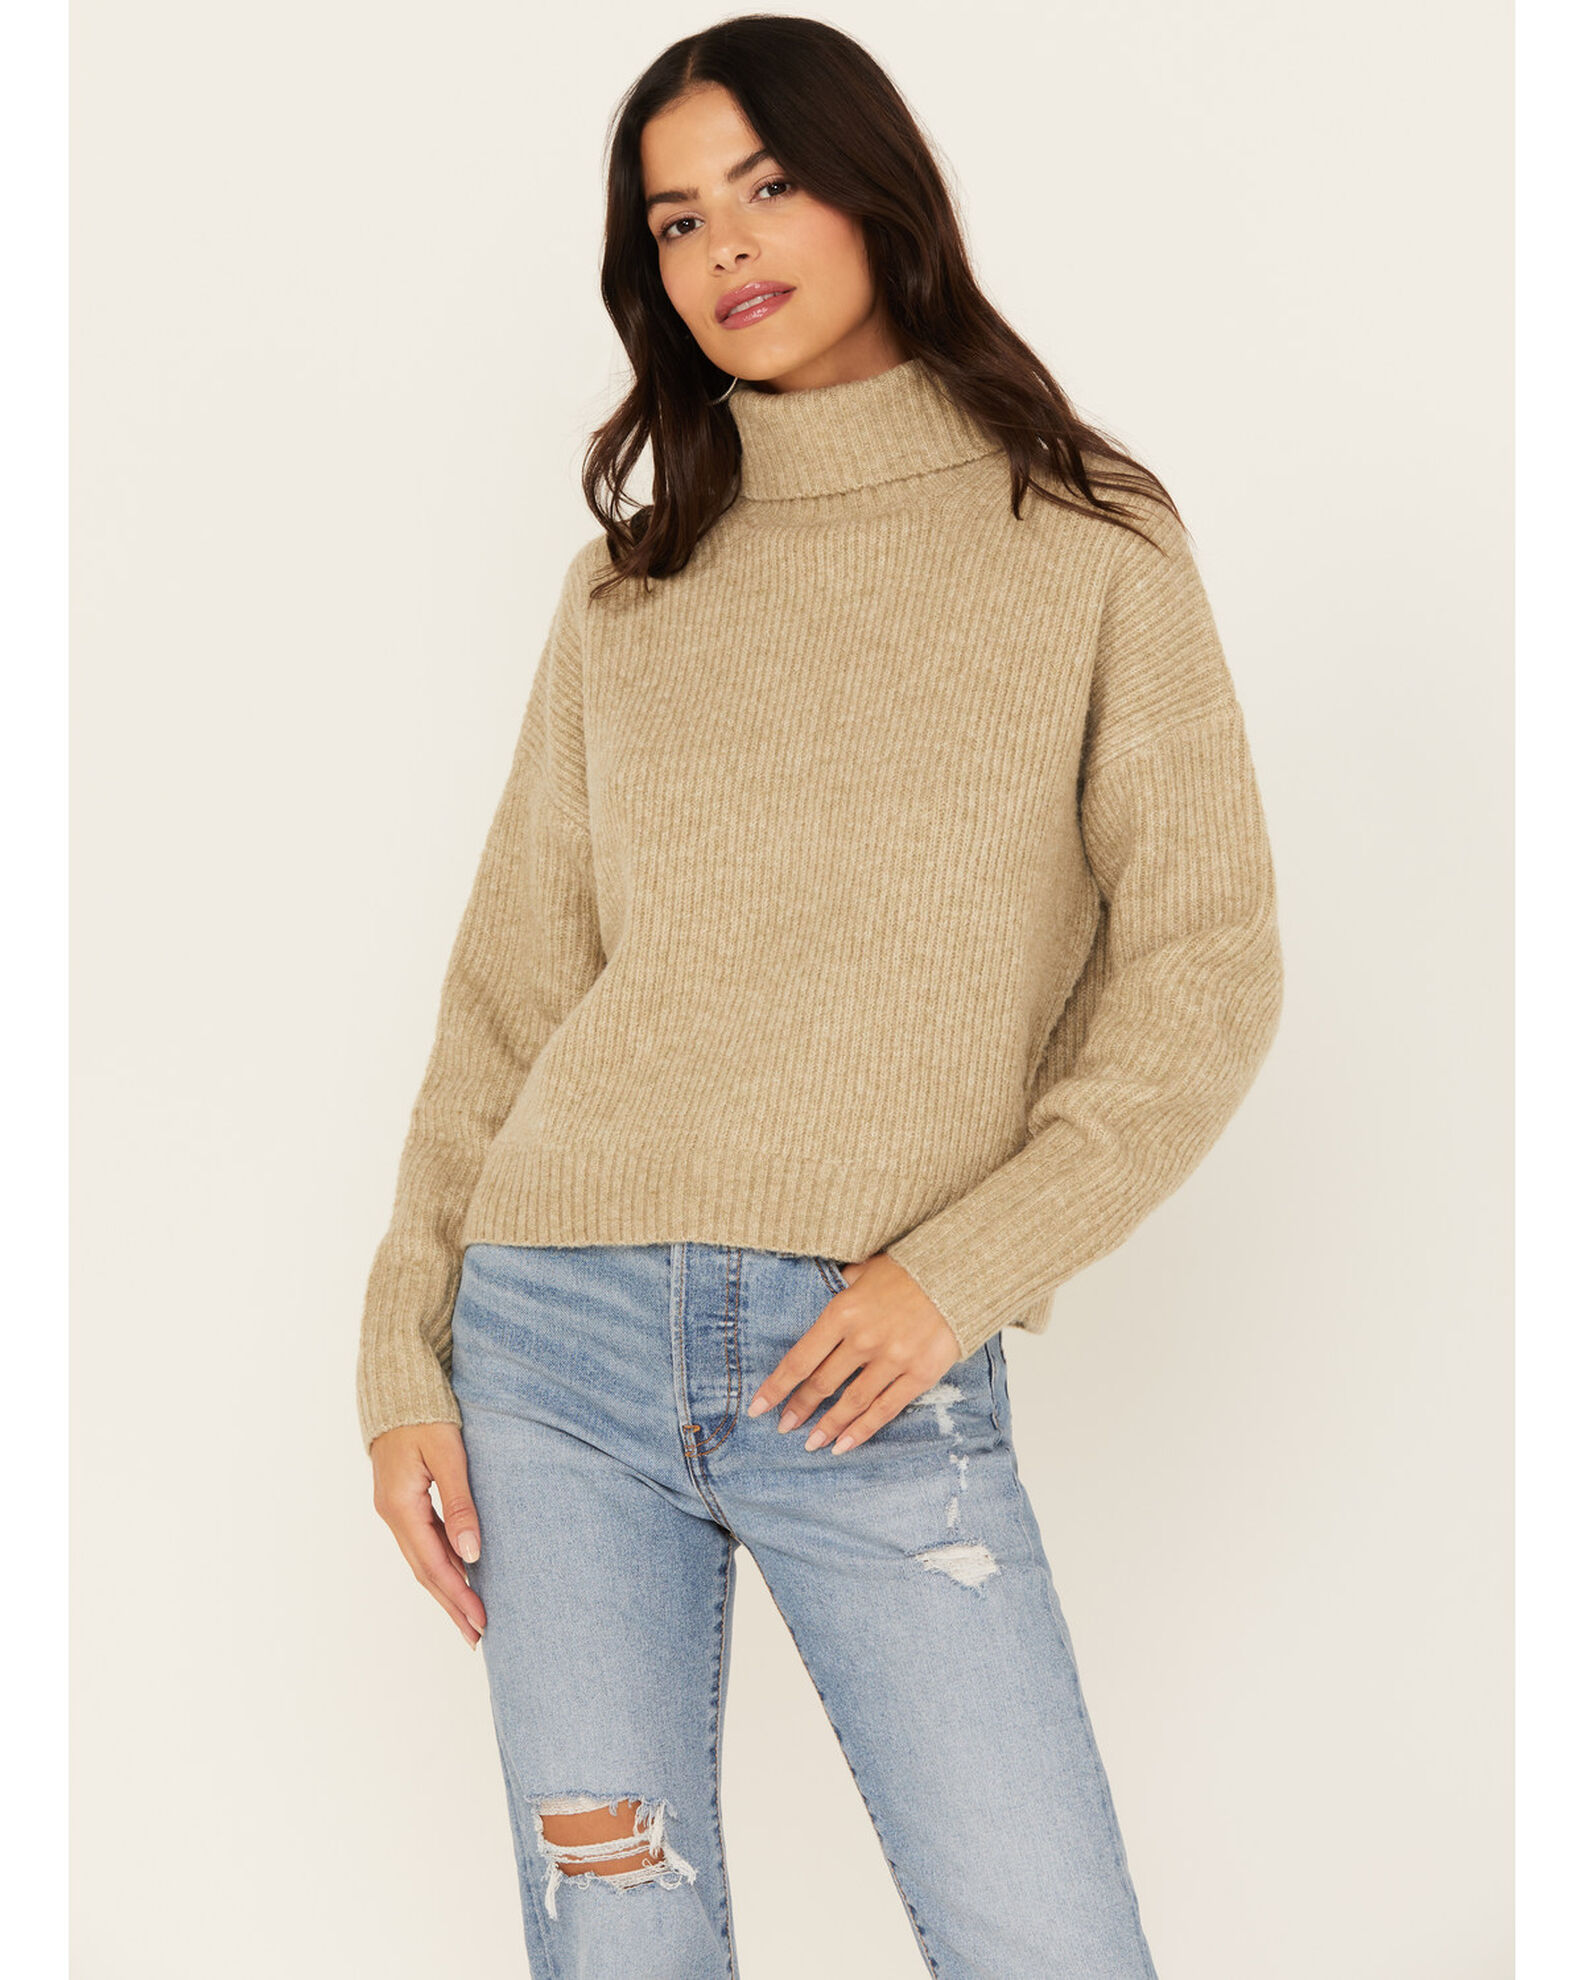 Sadie & Sage Women's Fiona Long Sleeve Pullover Sweater